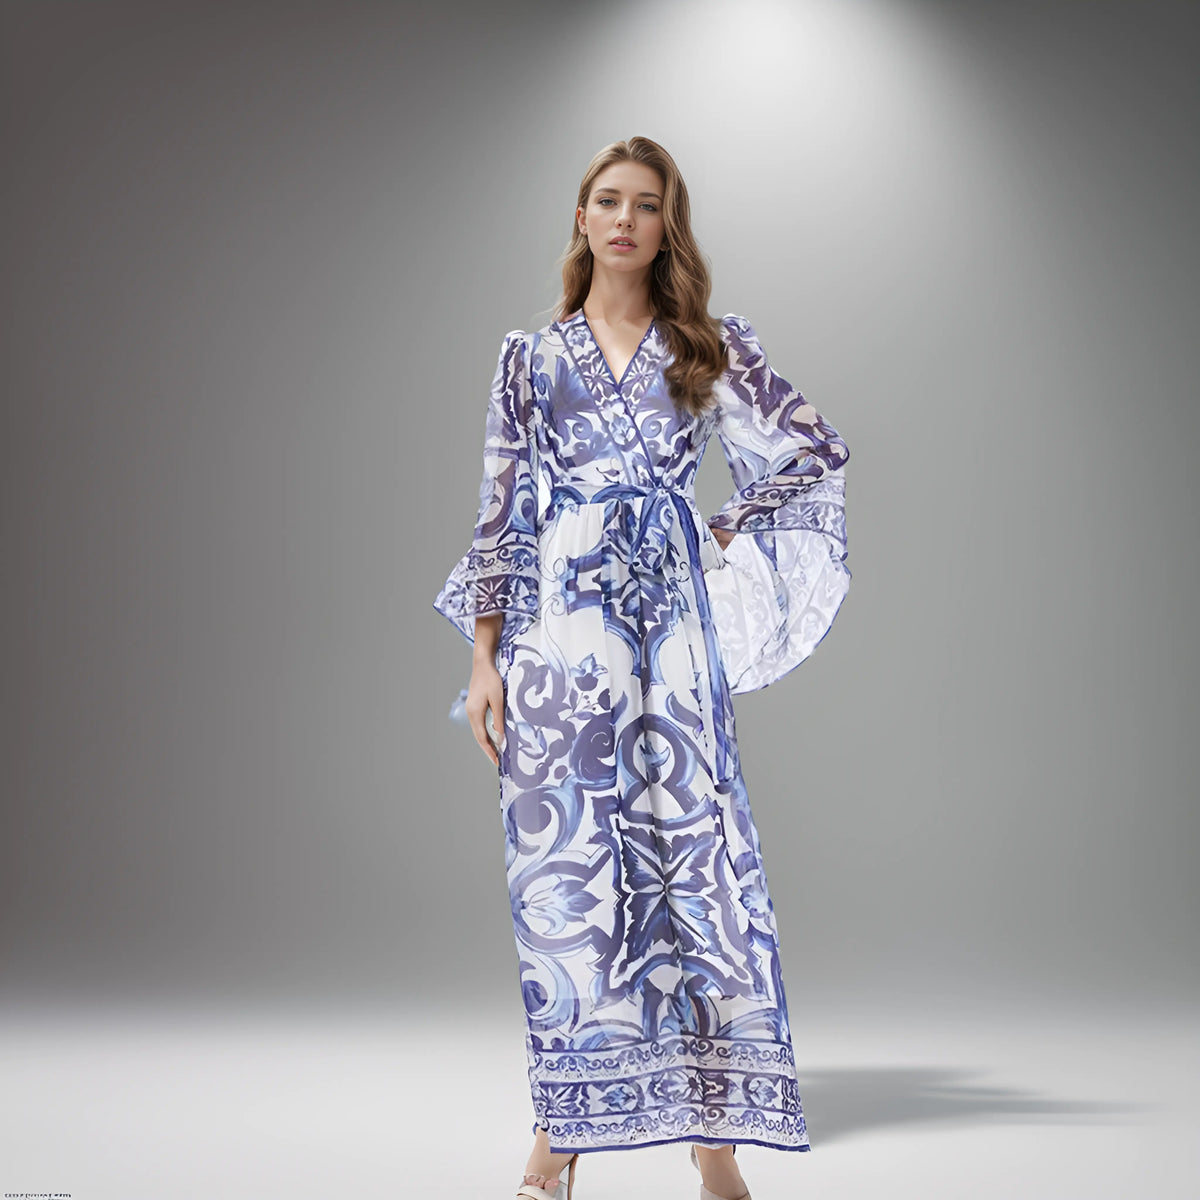 Blue & White Porcelain Floral Maxi Dress - Elegant Long Sleeve Summer/Autumn Dress